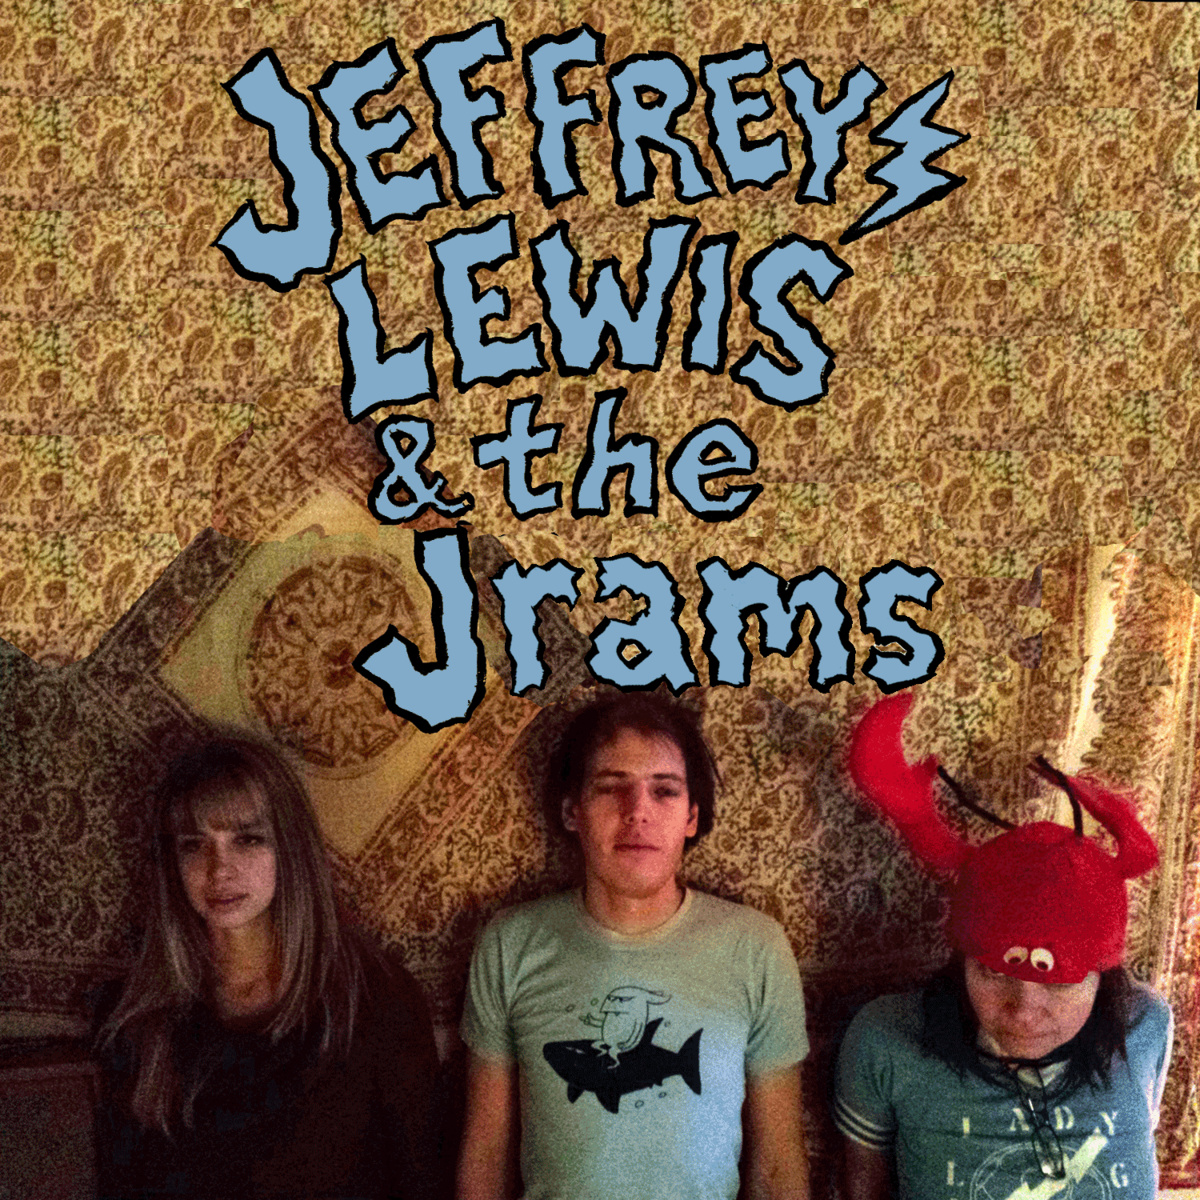 Tonight: Jeffrey Lewis & the Jrams